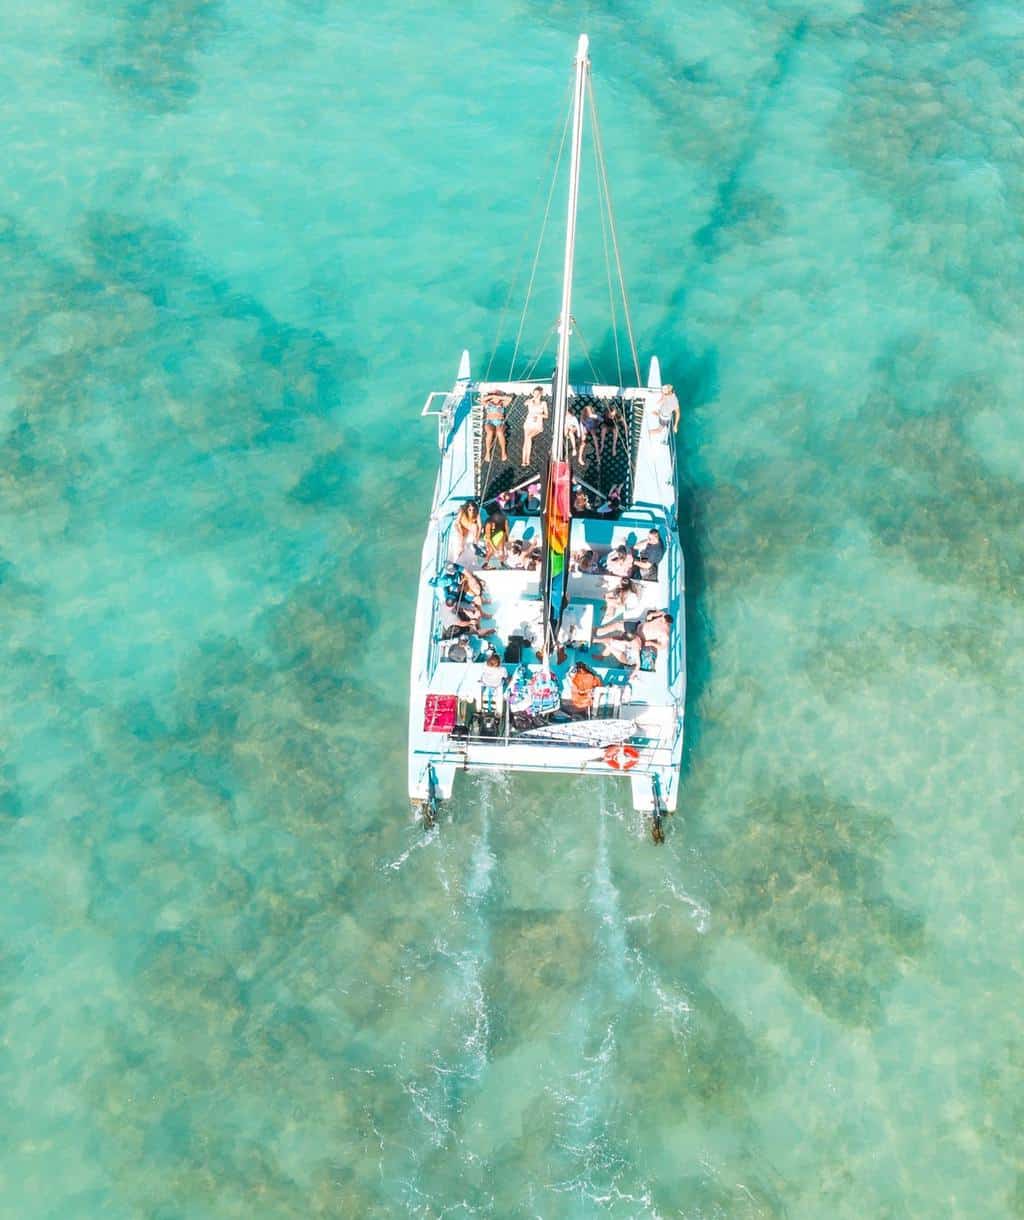 modern-boat-floating-on-blue-sea Drones